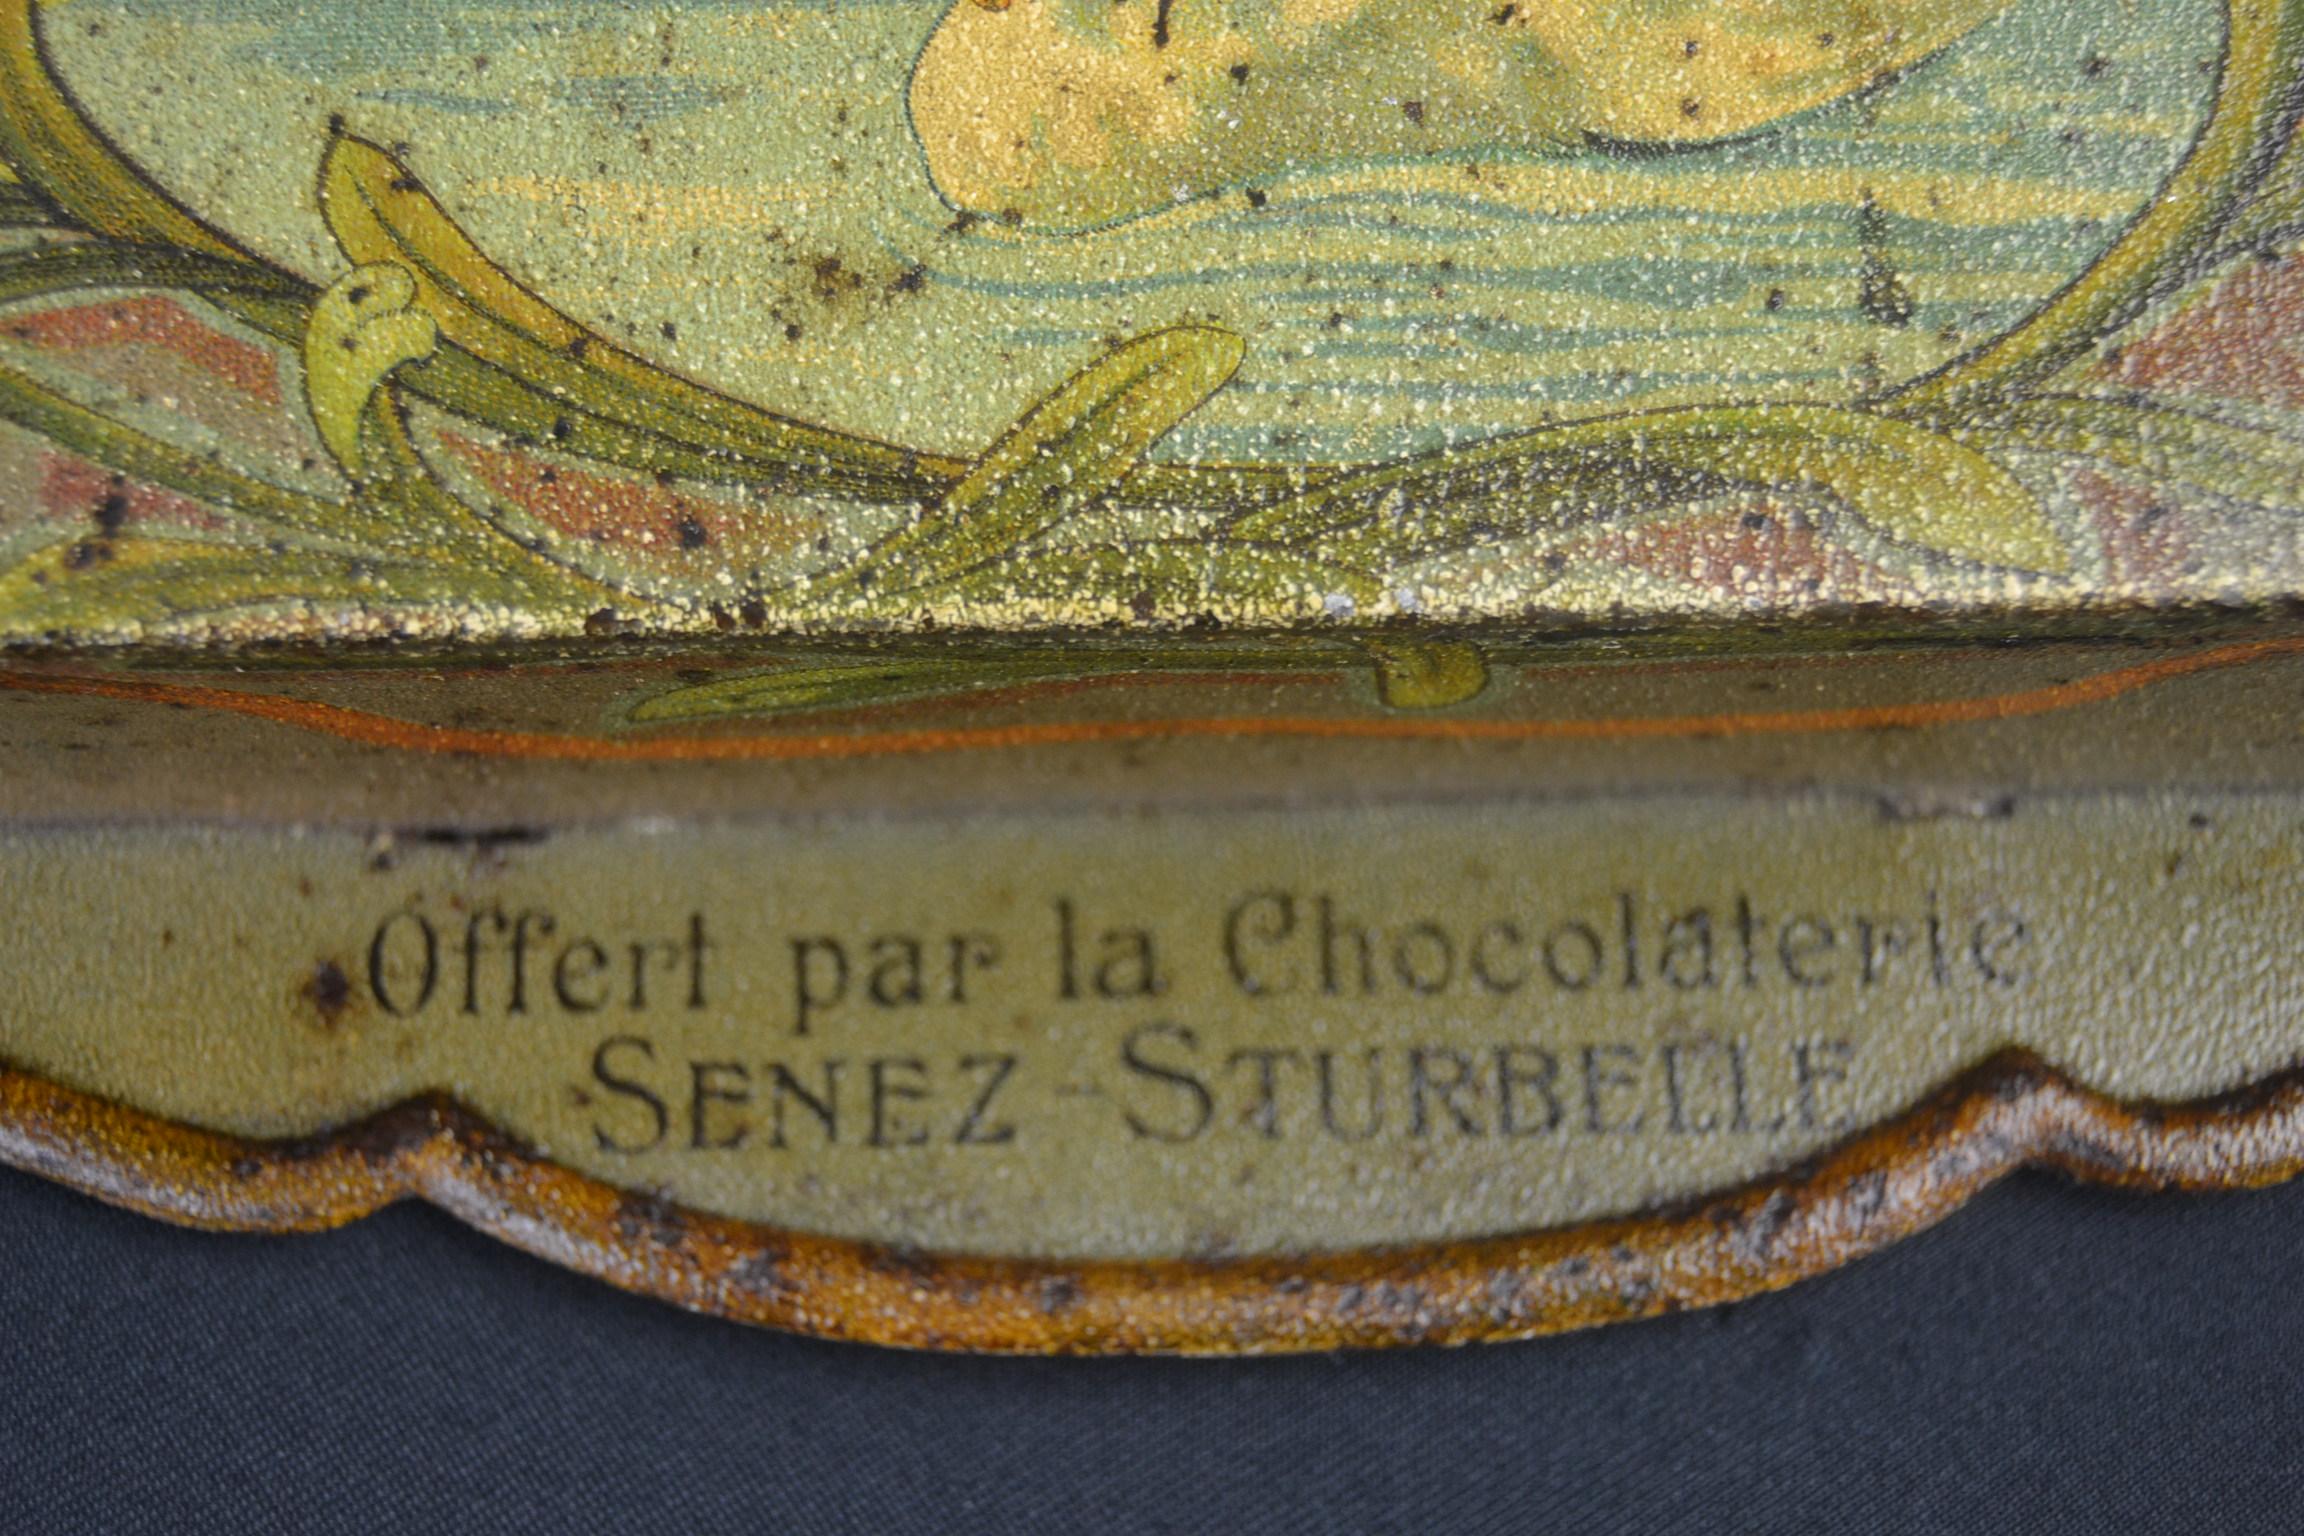 Briefhalter aus Chocolat Confectionery Senez-Sturbelle, Jugendstil, Belgien (Belgisch) im Angebot